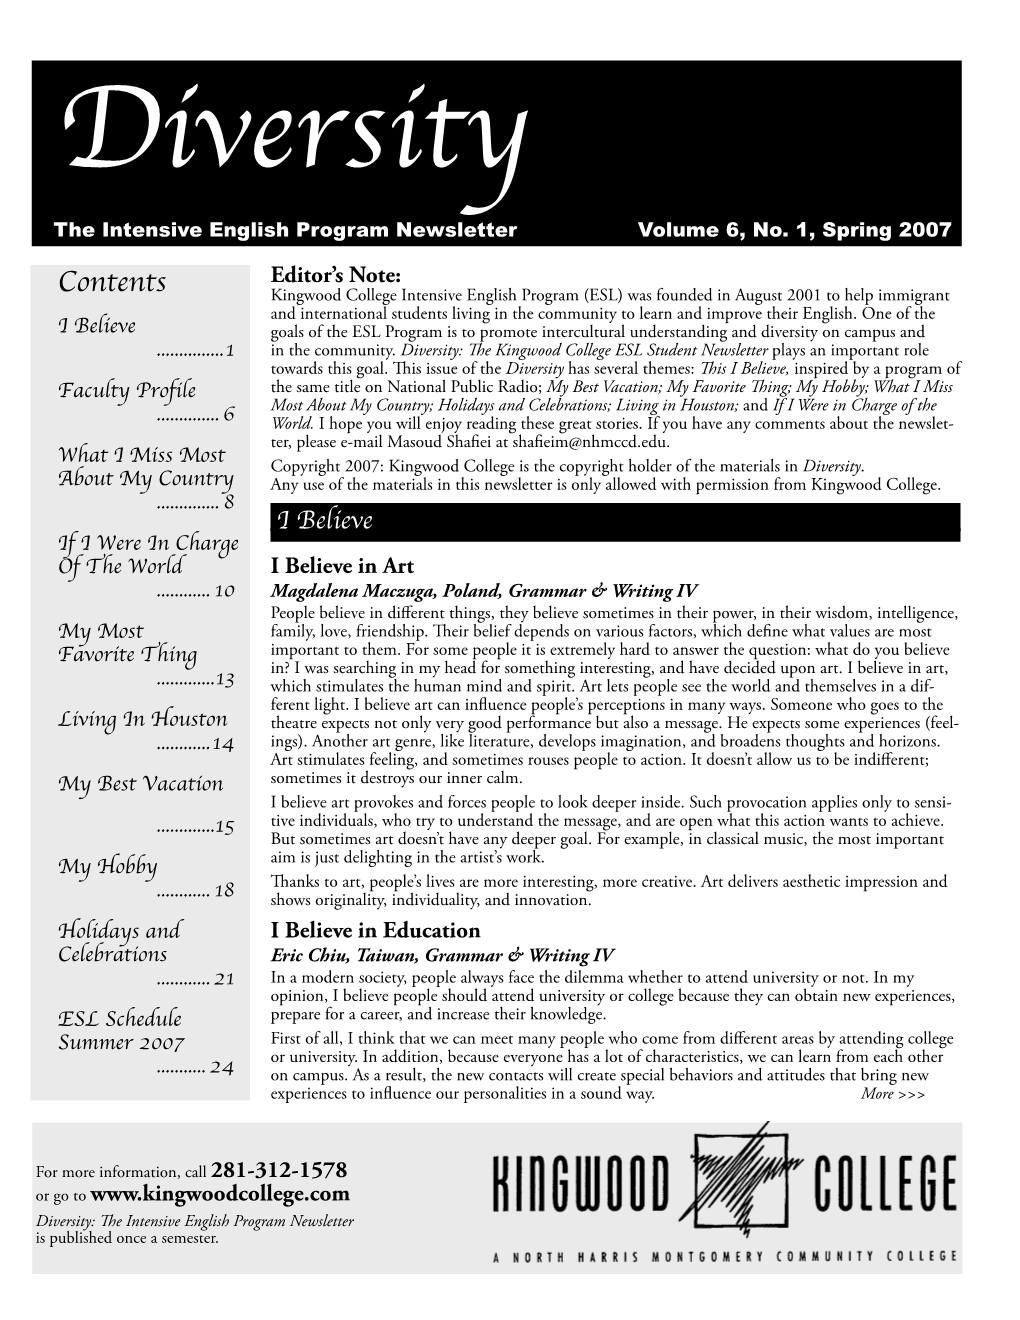 Diversity the Intensive English Program Newsletter Volume 6, No